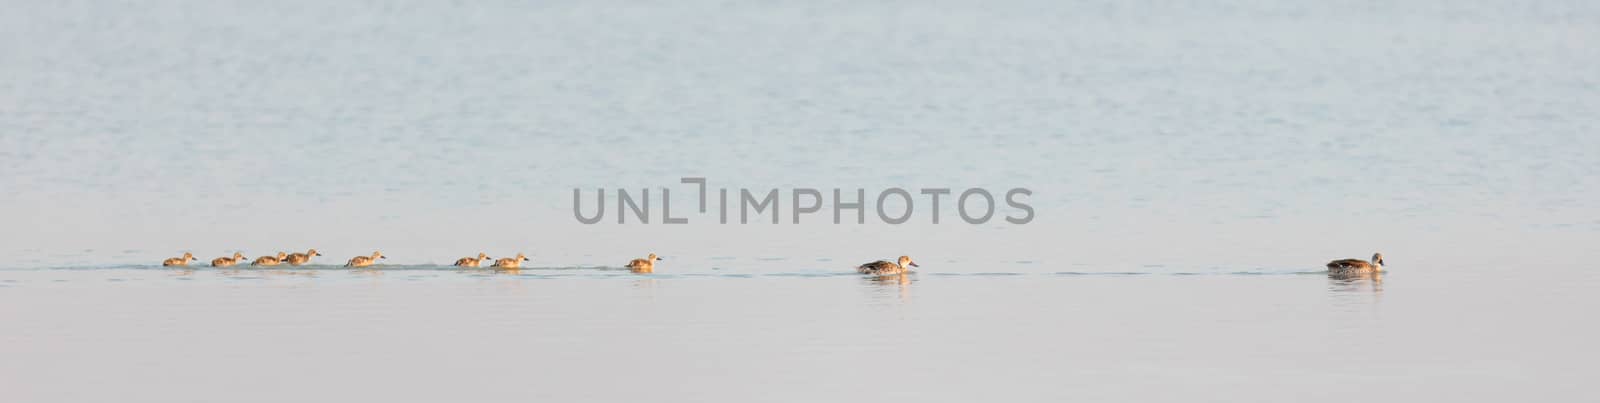 Family of ducks in the Makgadikgadi pans - Botswana